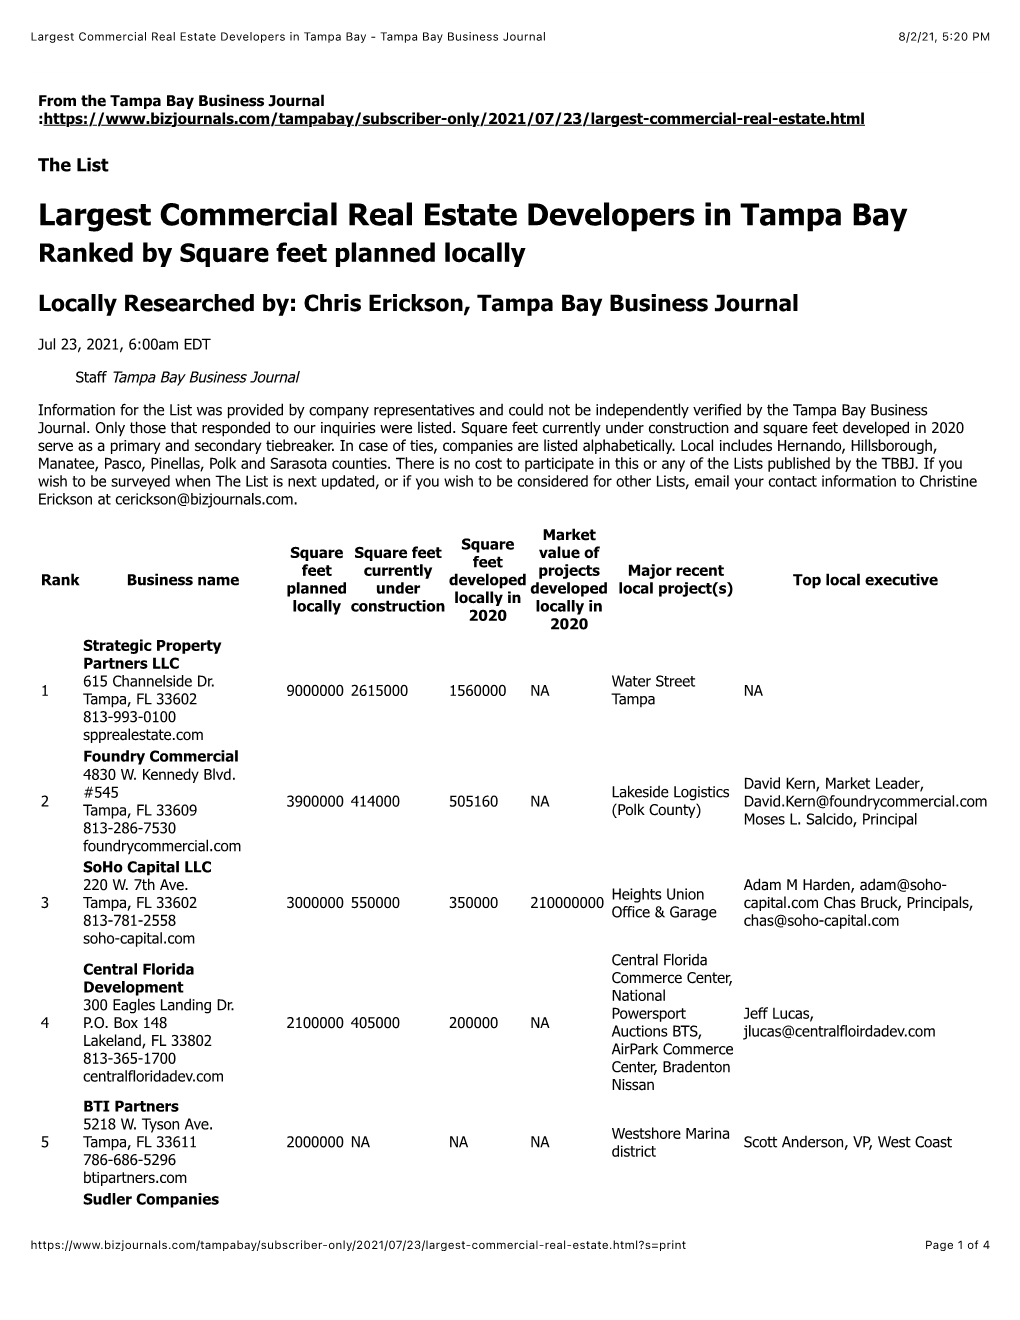 DDA Ranked 9Th Largest Commercial Real Estate